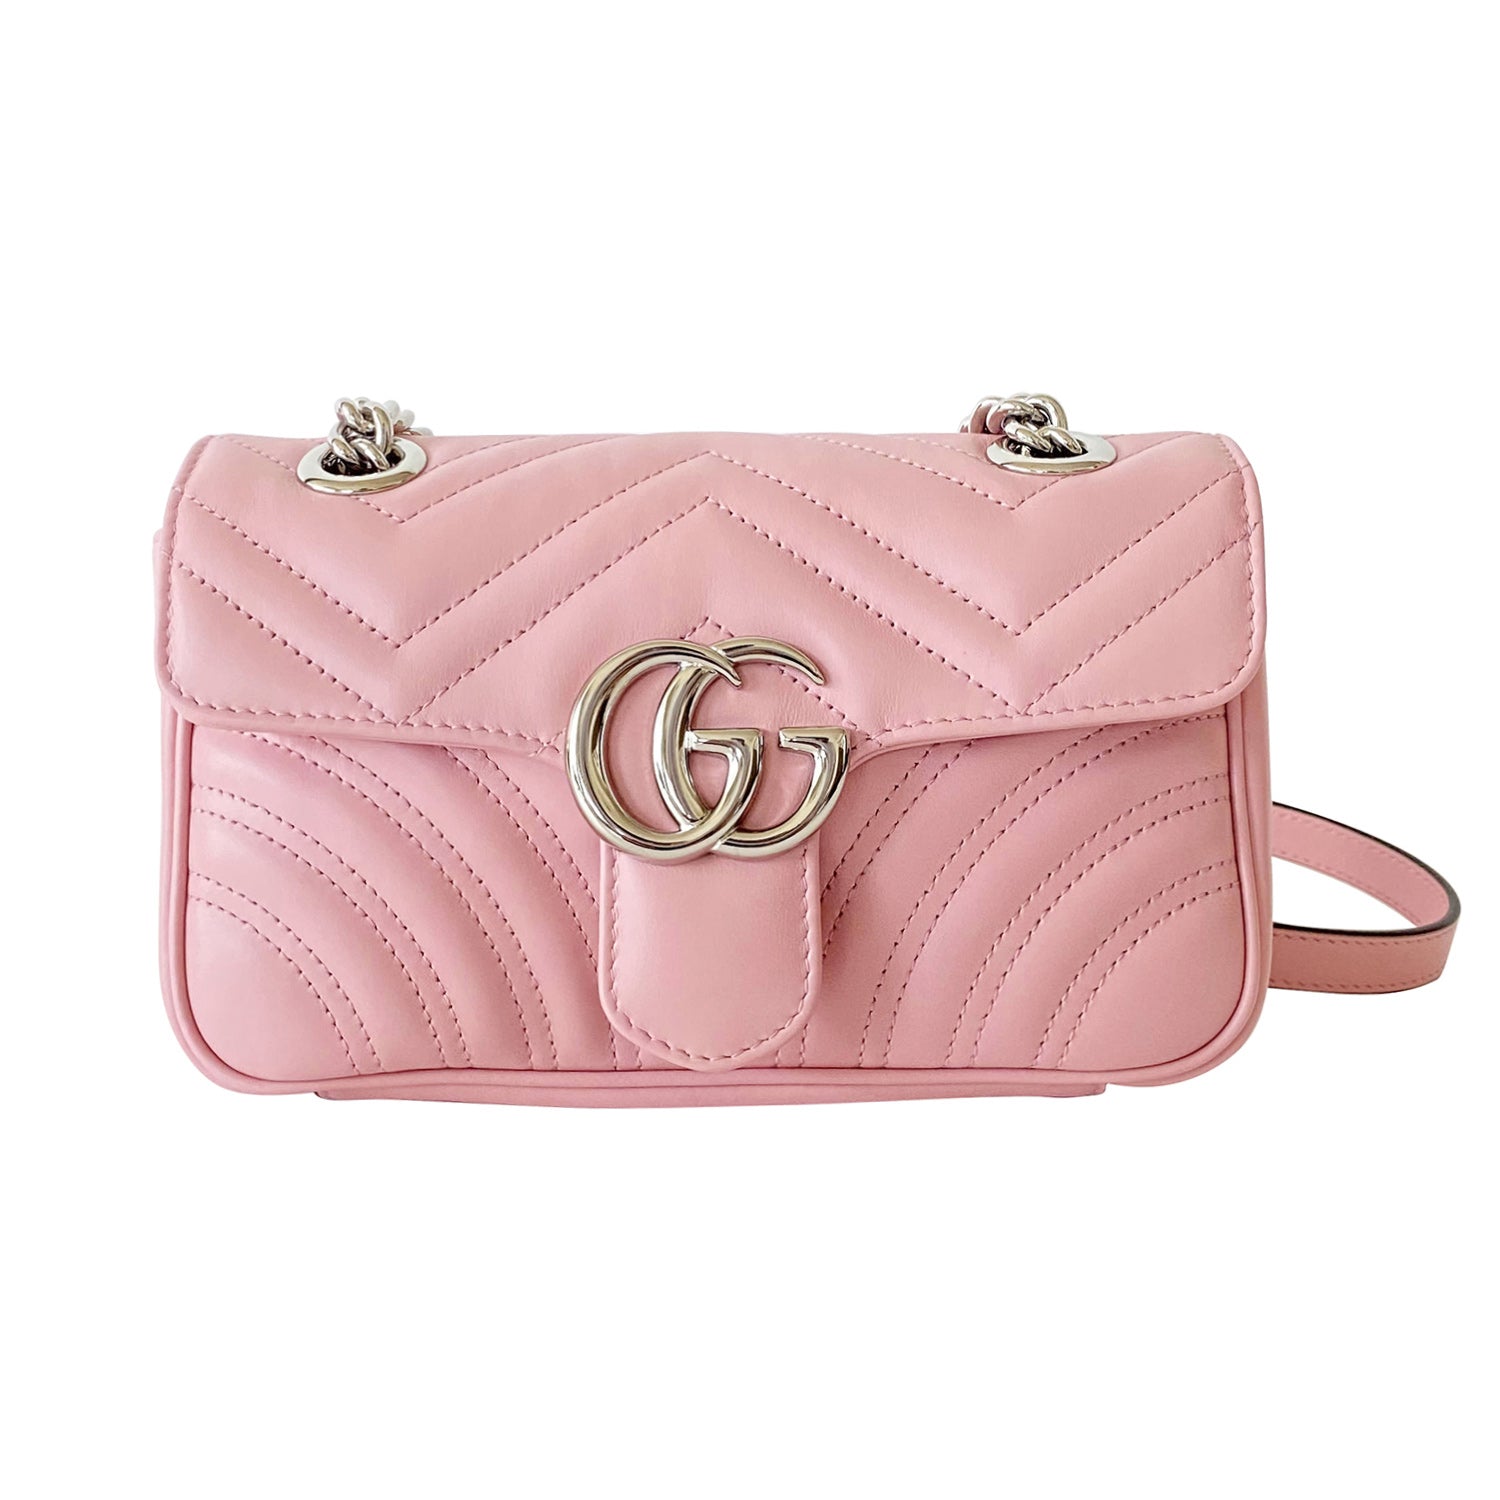 Gucci GG Marmont Mini Camera Bag in Wild Rose Matelassé - SOLD